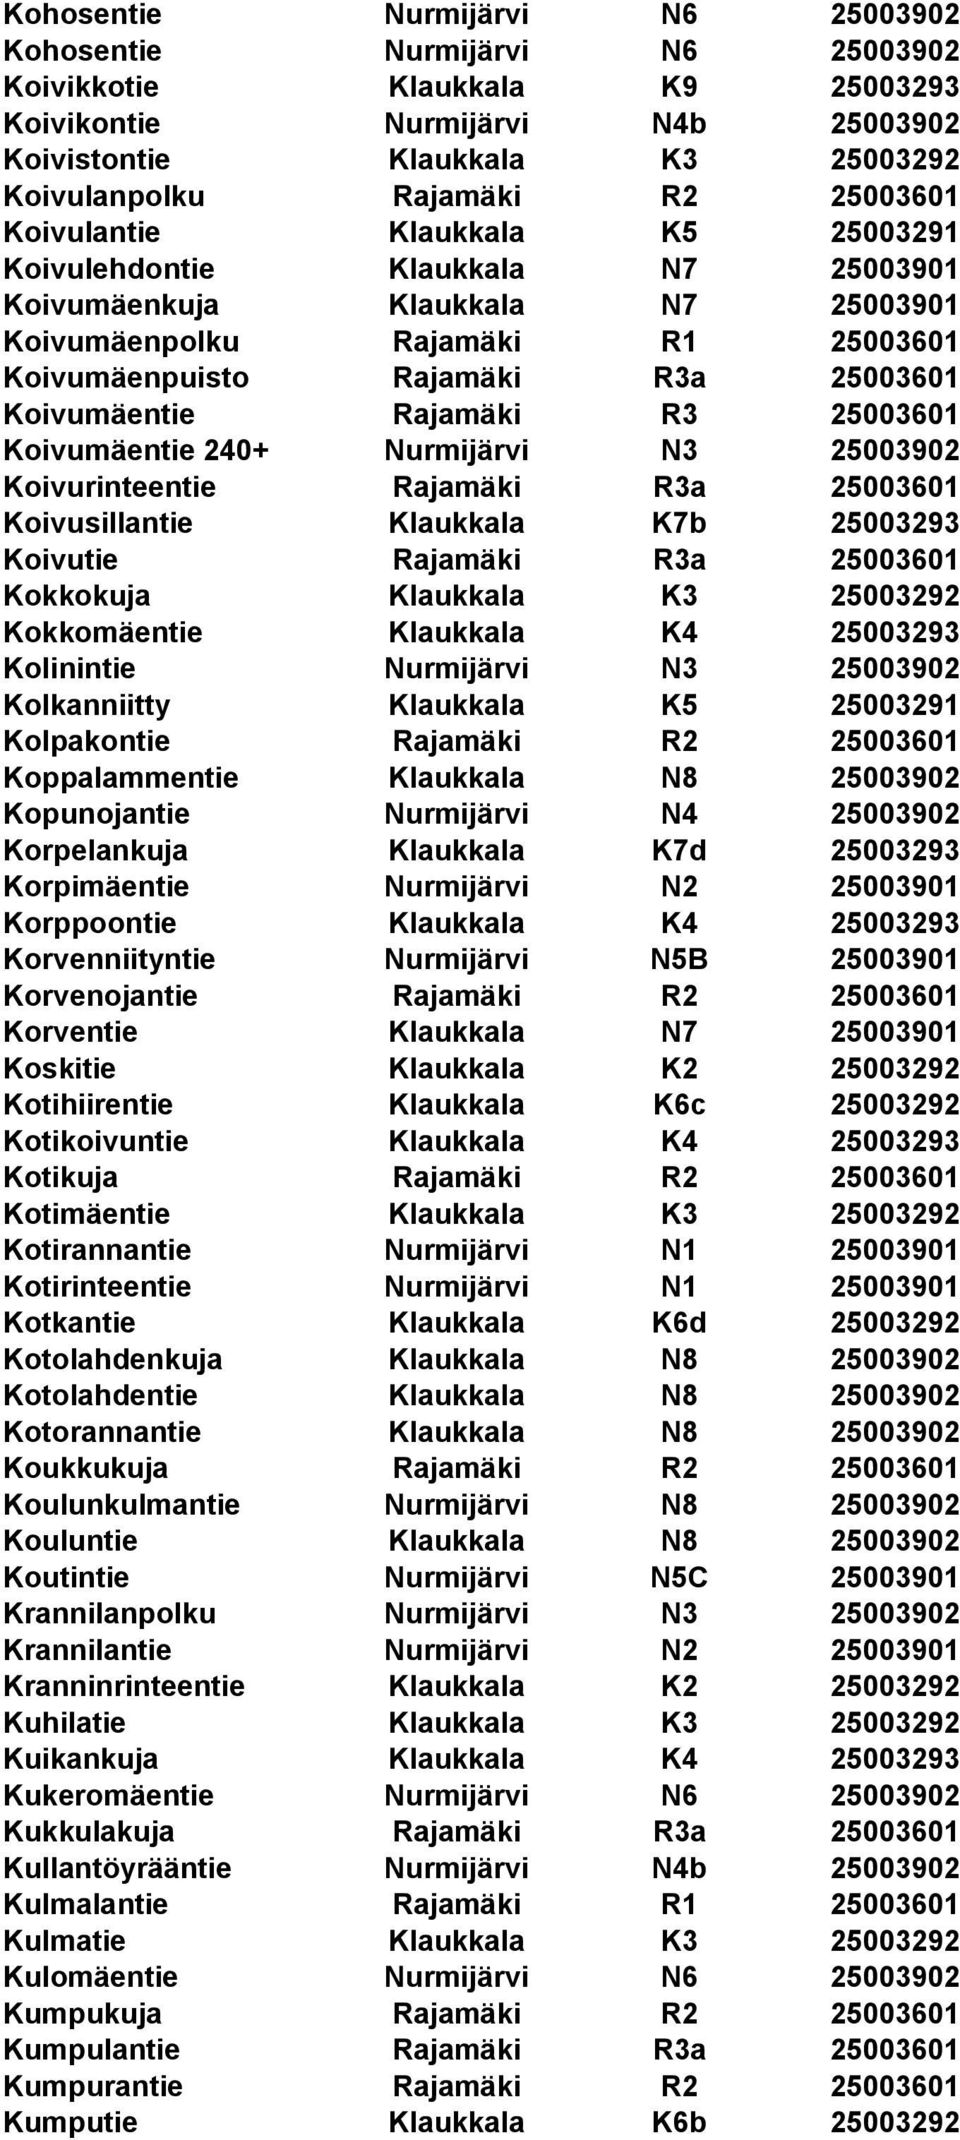 Koivumäentie Rajamäki R3 25003601 Koivumäentie 240+ Nurmijärvi N3 25003902 Koivurinteentie Rajamäki R3a 25003601 Koivusillantie Klaukkala K7b 25003293 Koivutie Rajamäki R3a 25003601 Kokkokuja